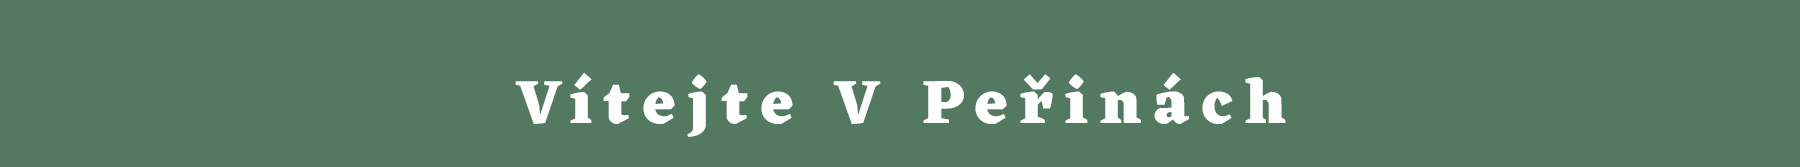 VPerinach - homepage_slider_vperinach